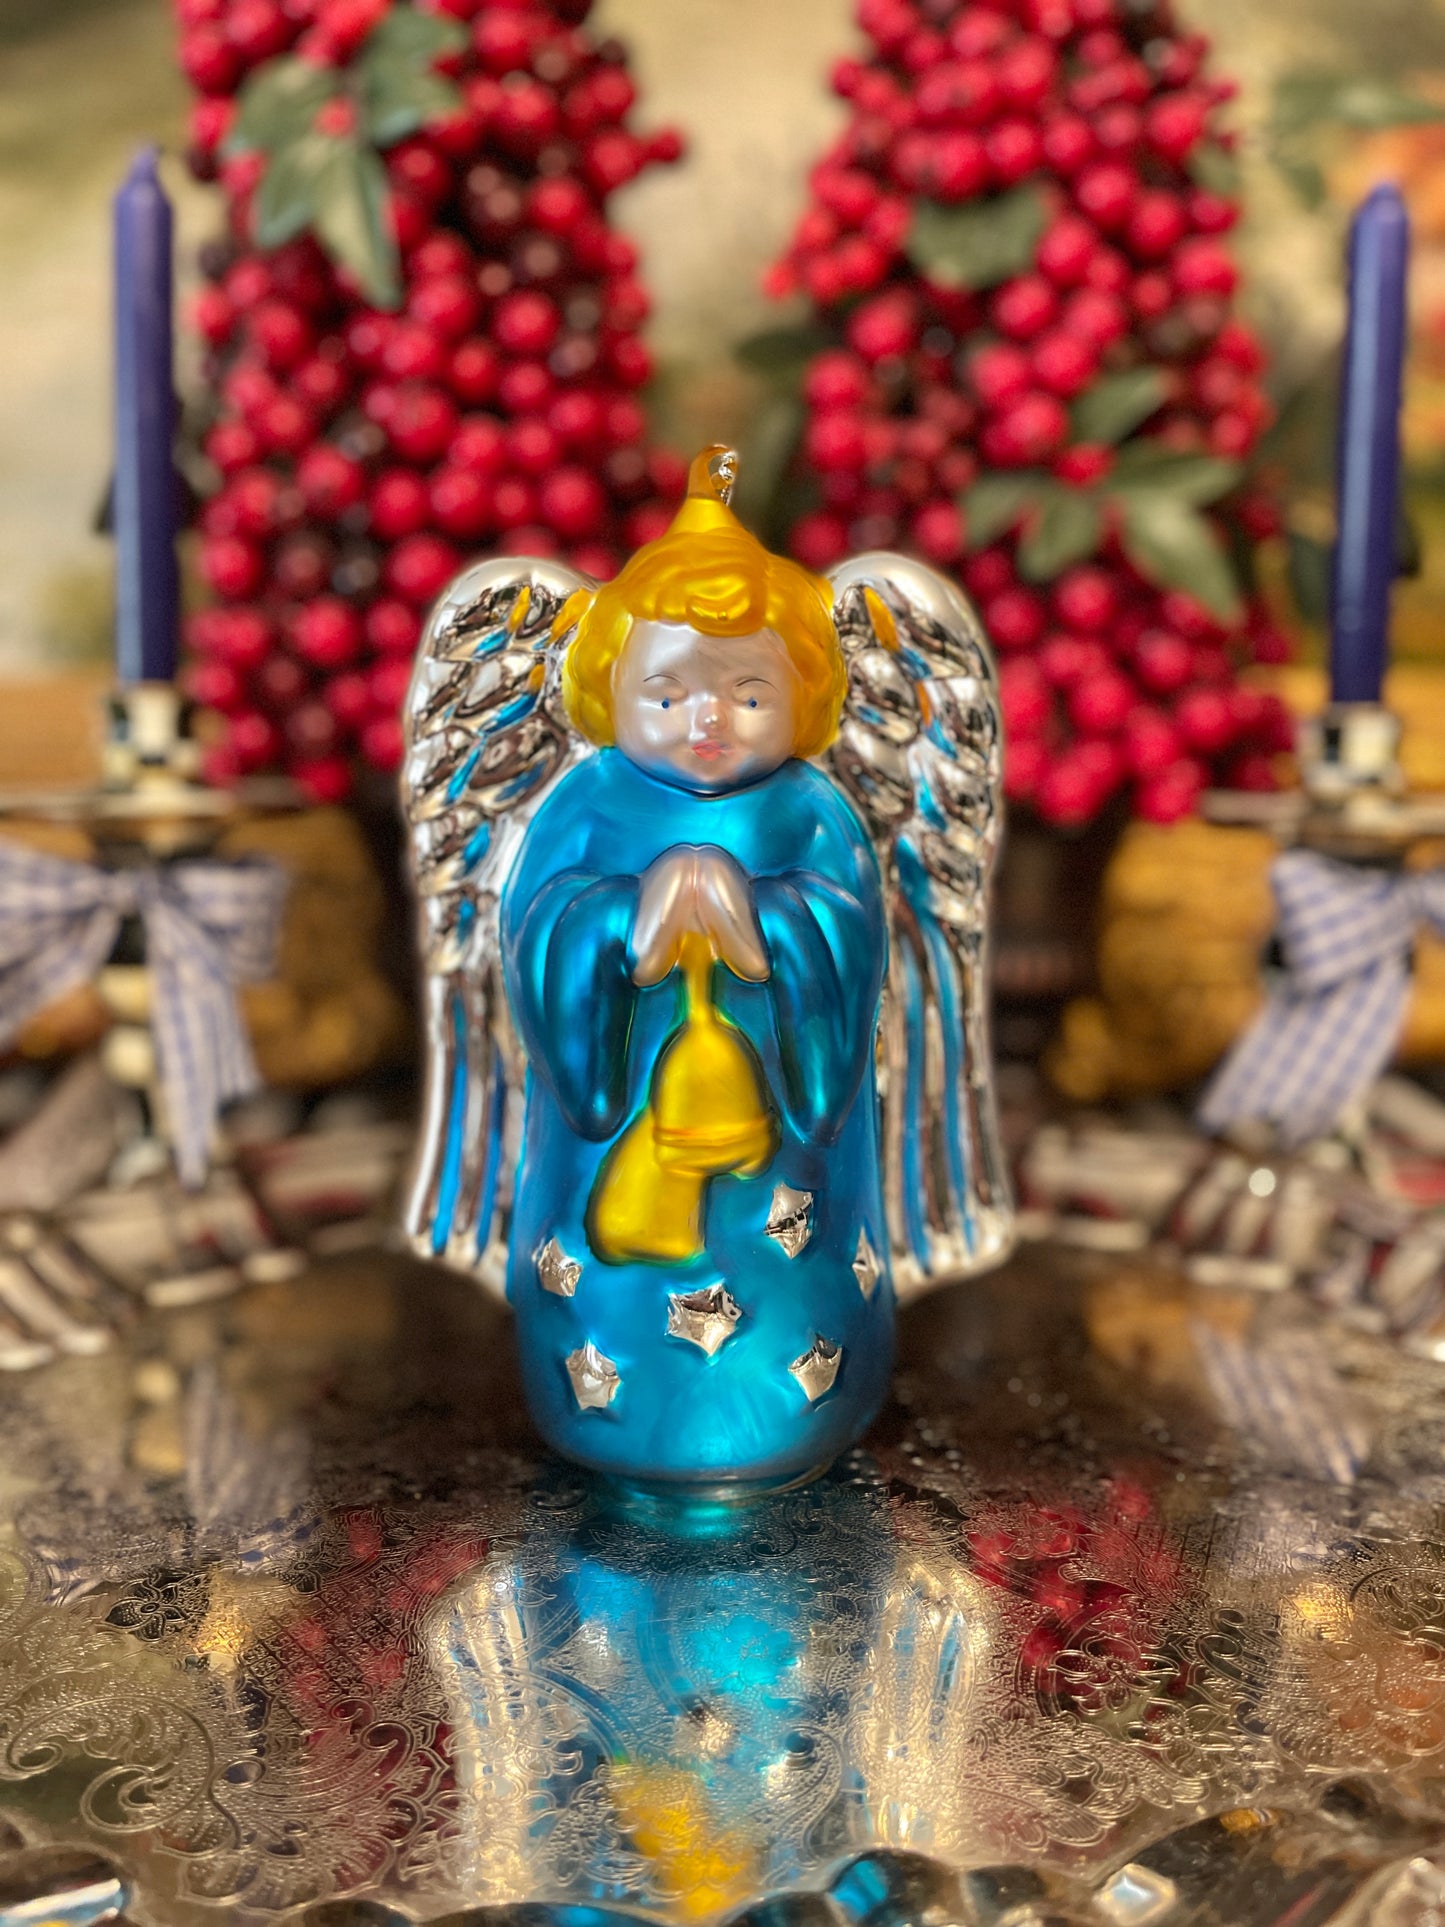 LARGE Angel Mercury Glass Ornament by Dept 56, Vintage